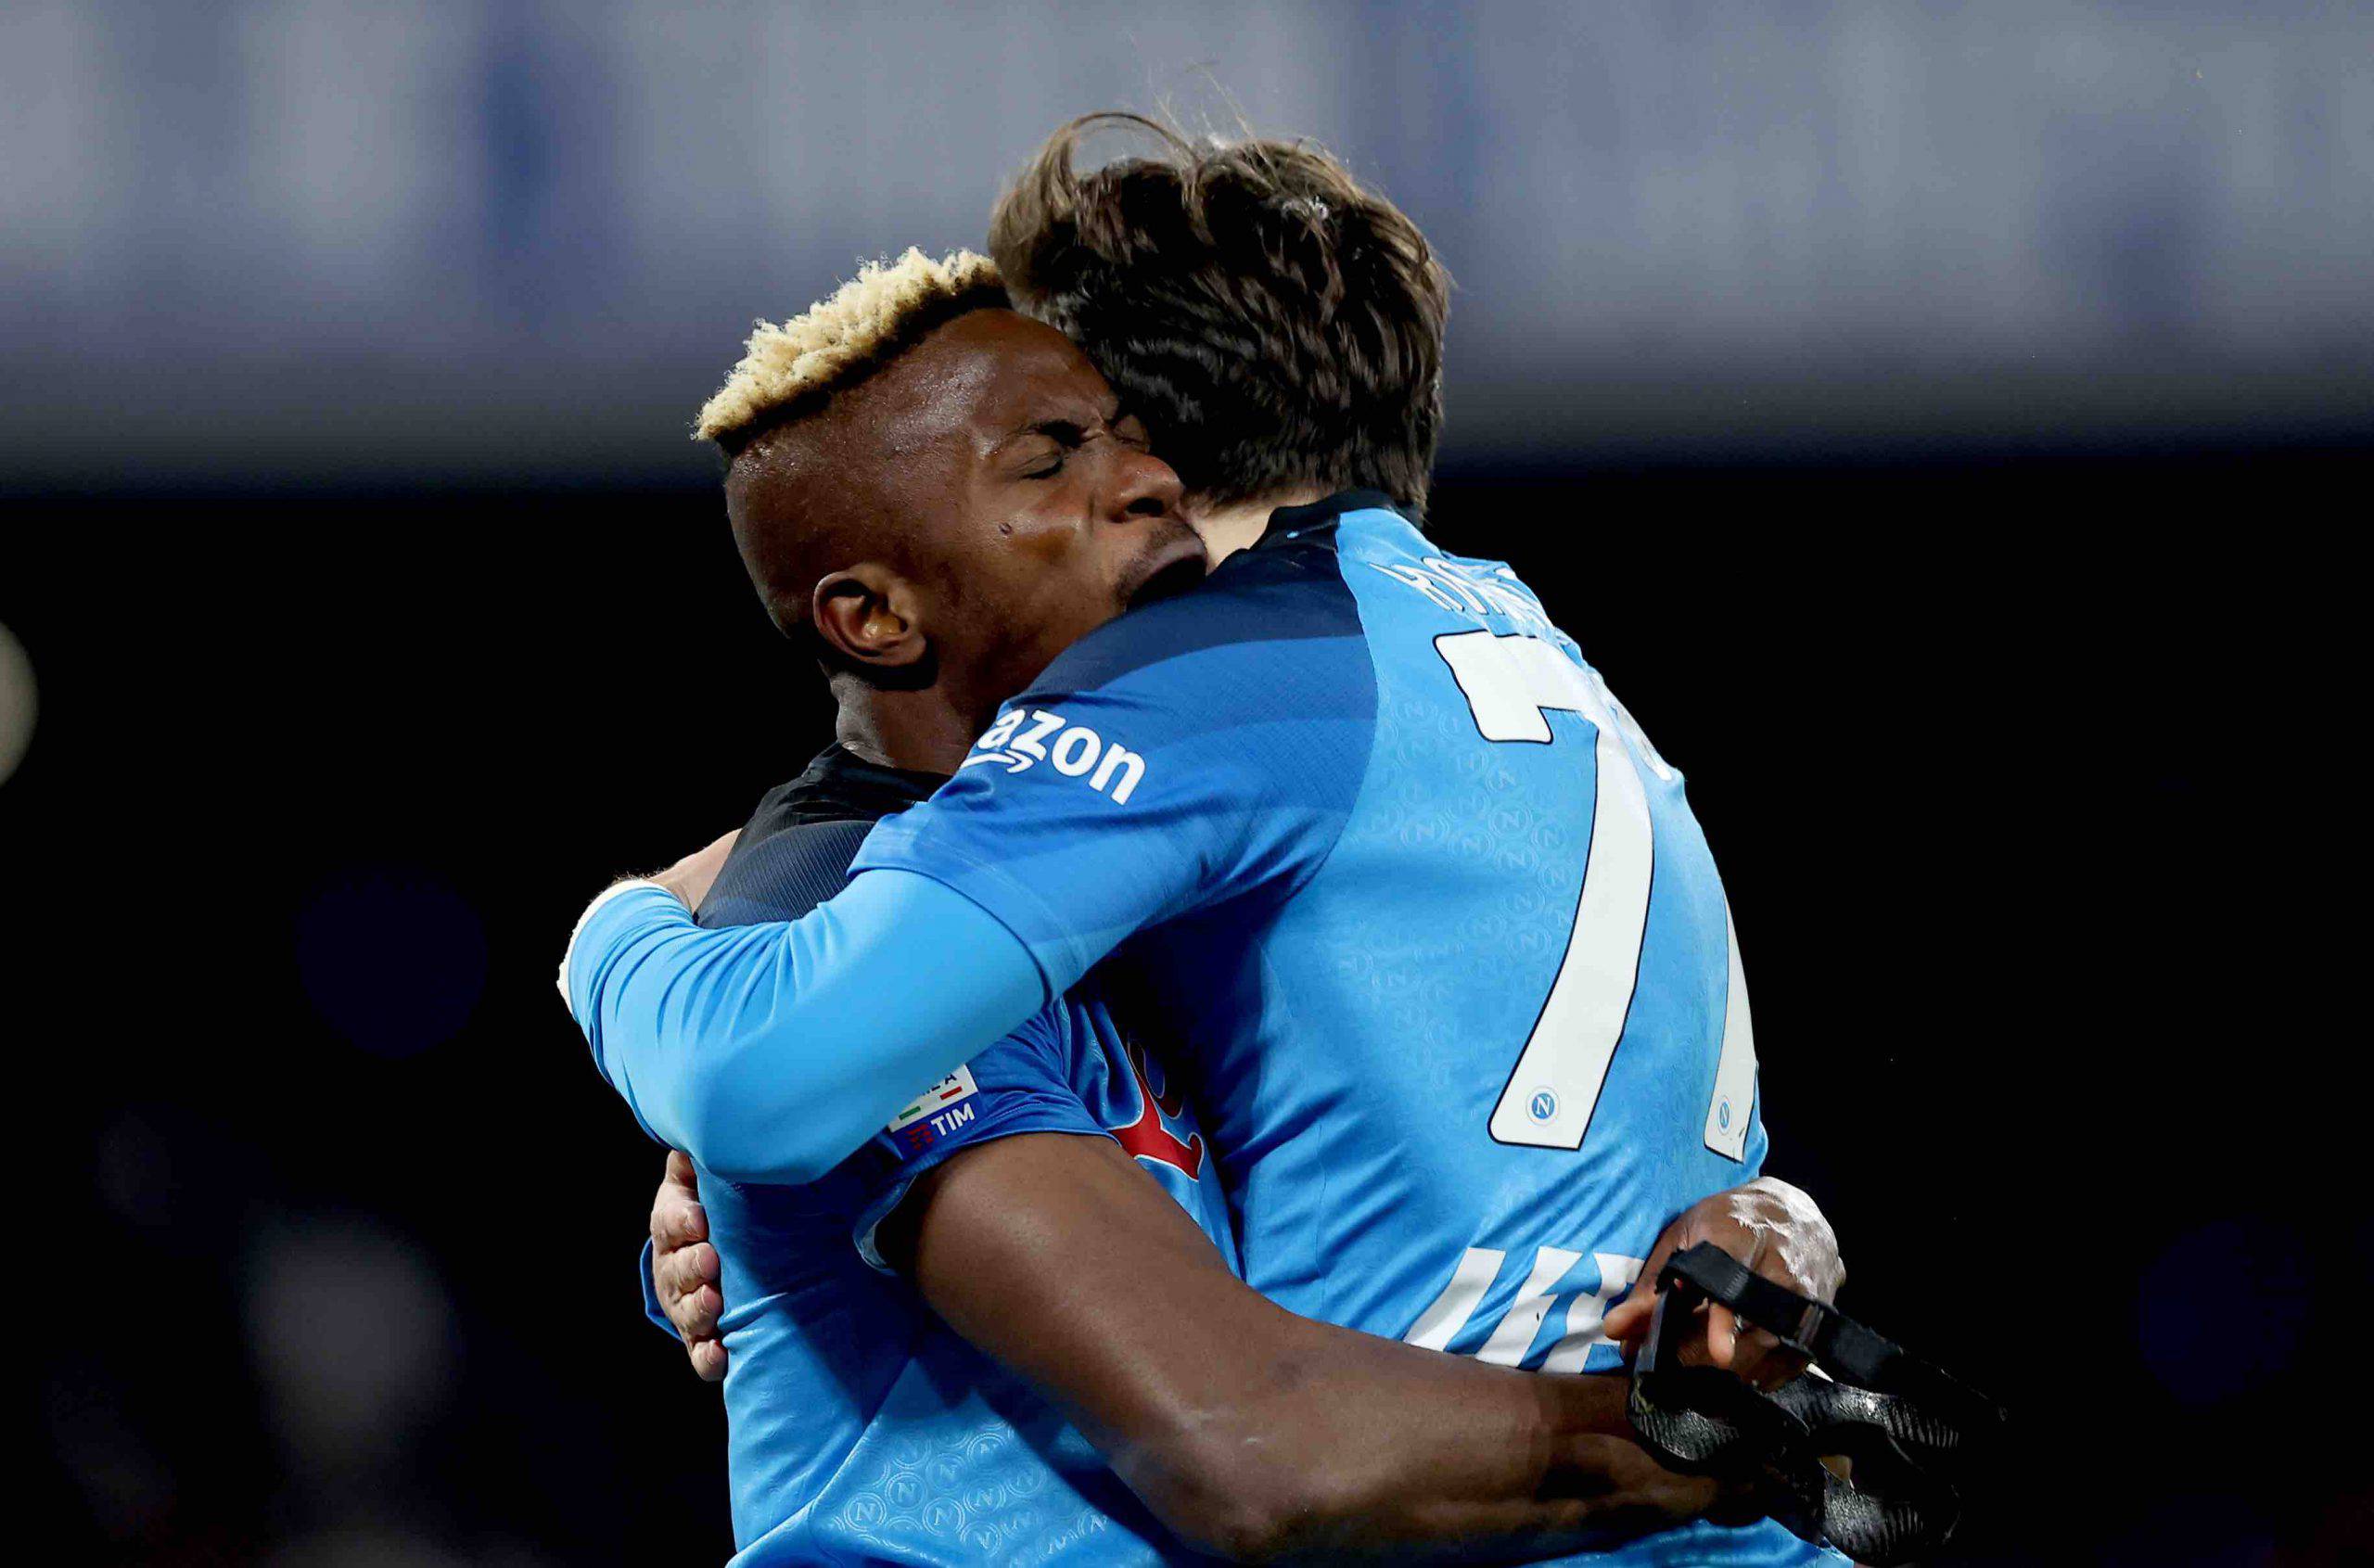 Napoli Champions